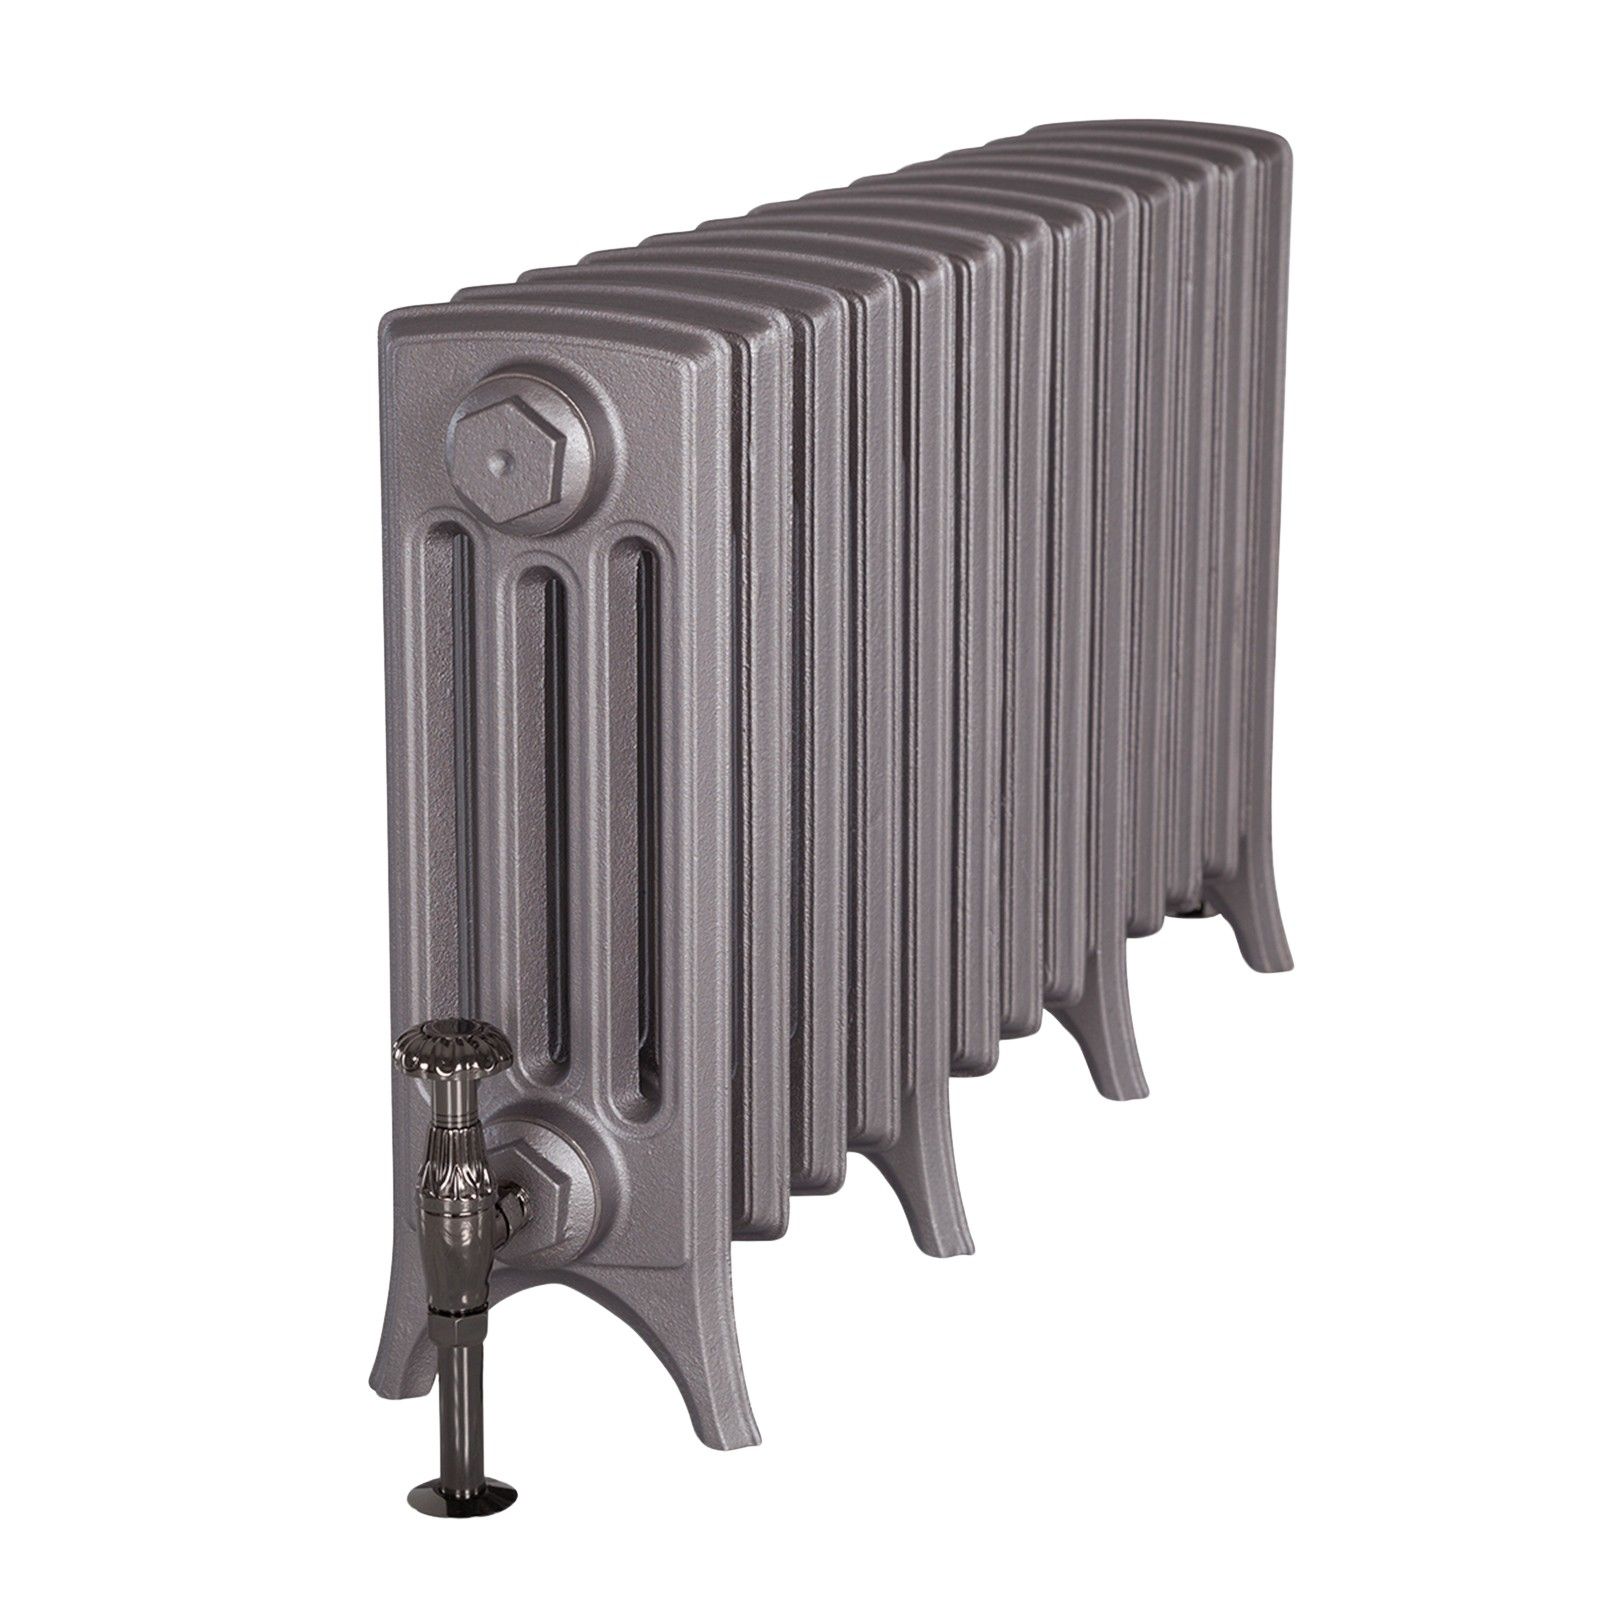 Rathbone radiator 4 columns - 460mm high